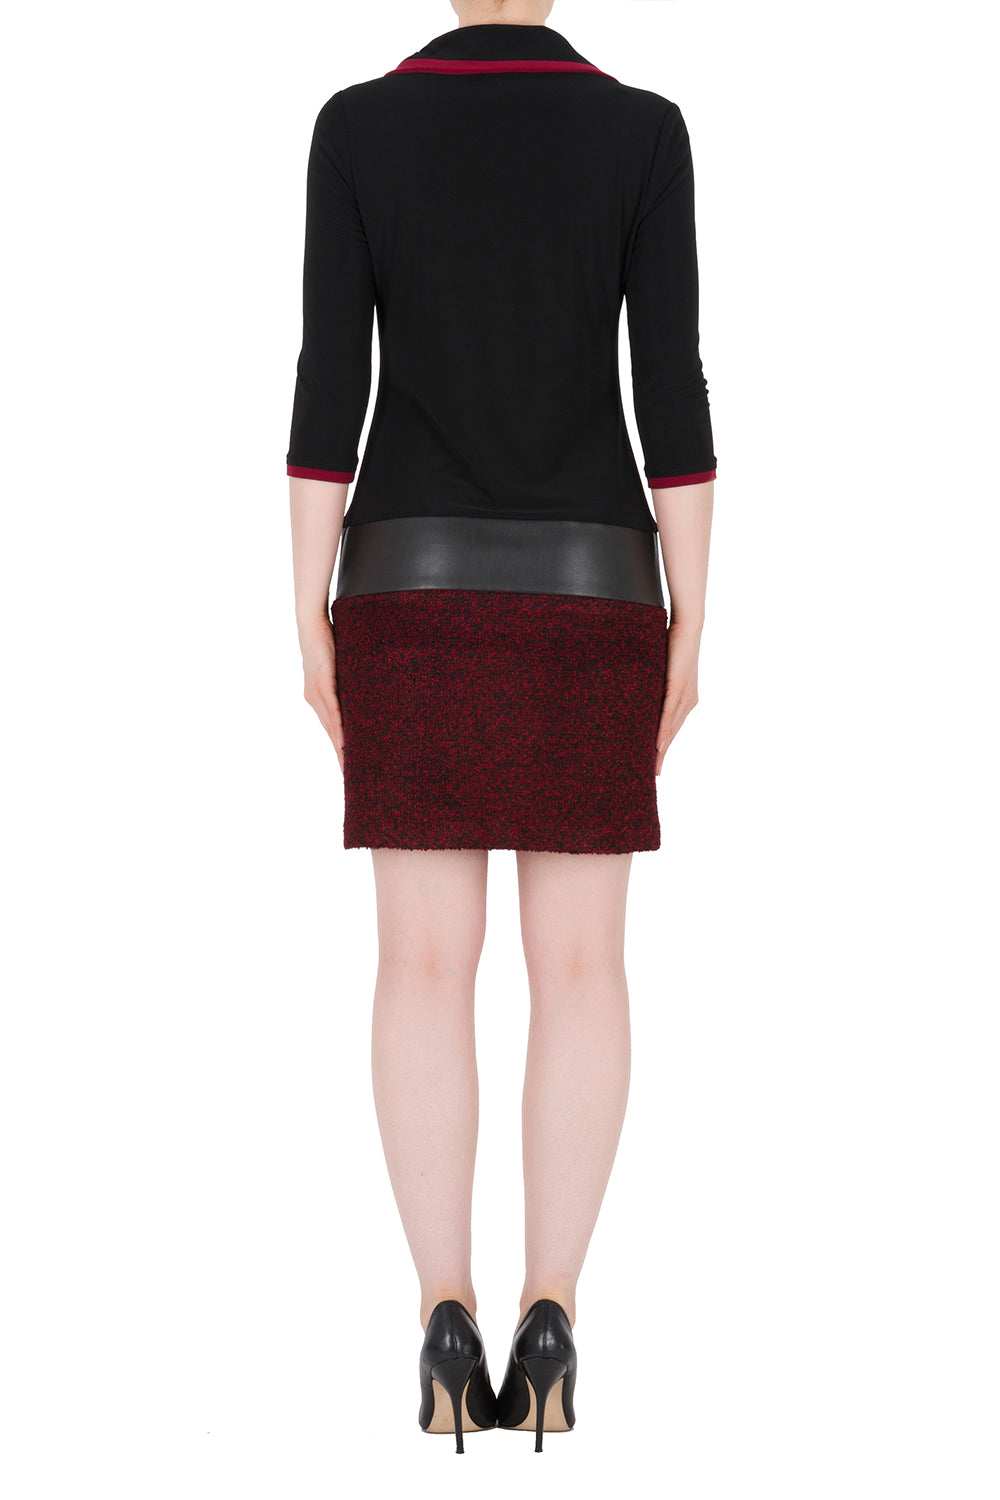 Joseph Ribkoff Black-Red-Cranberry Tunic-Dress Style 184845